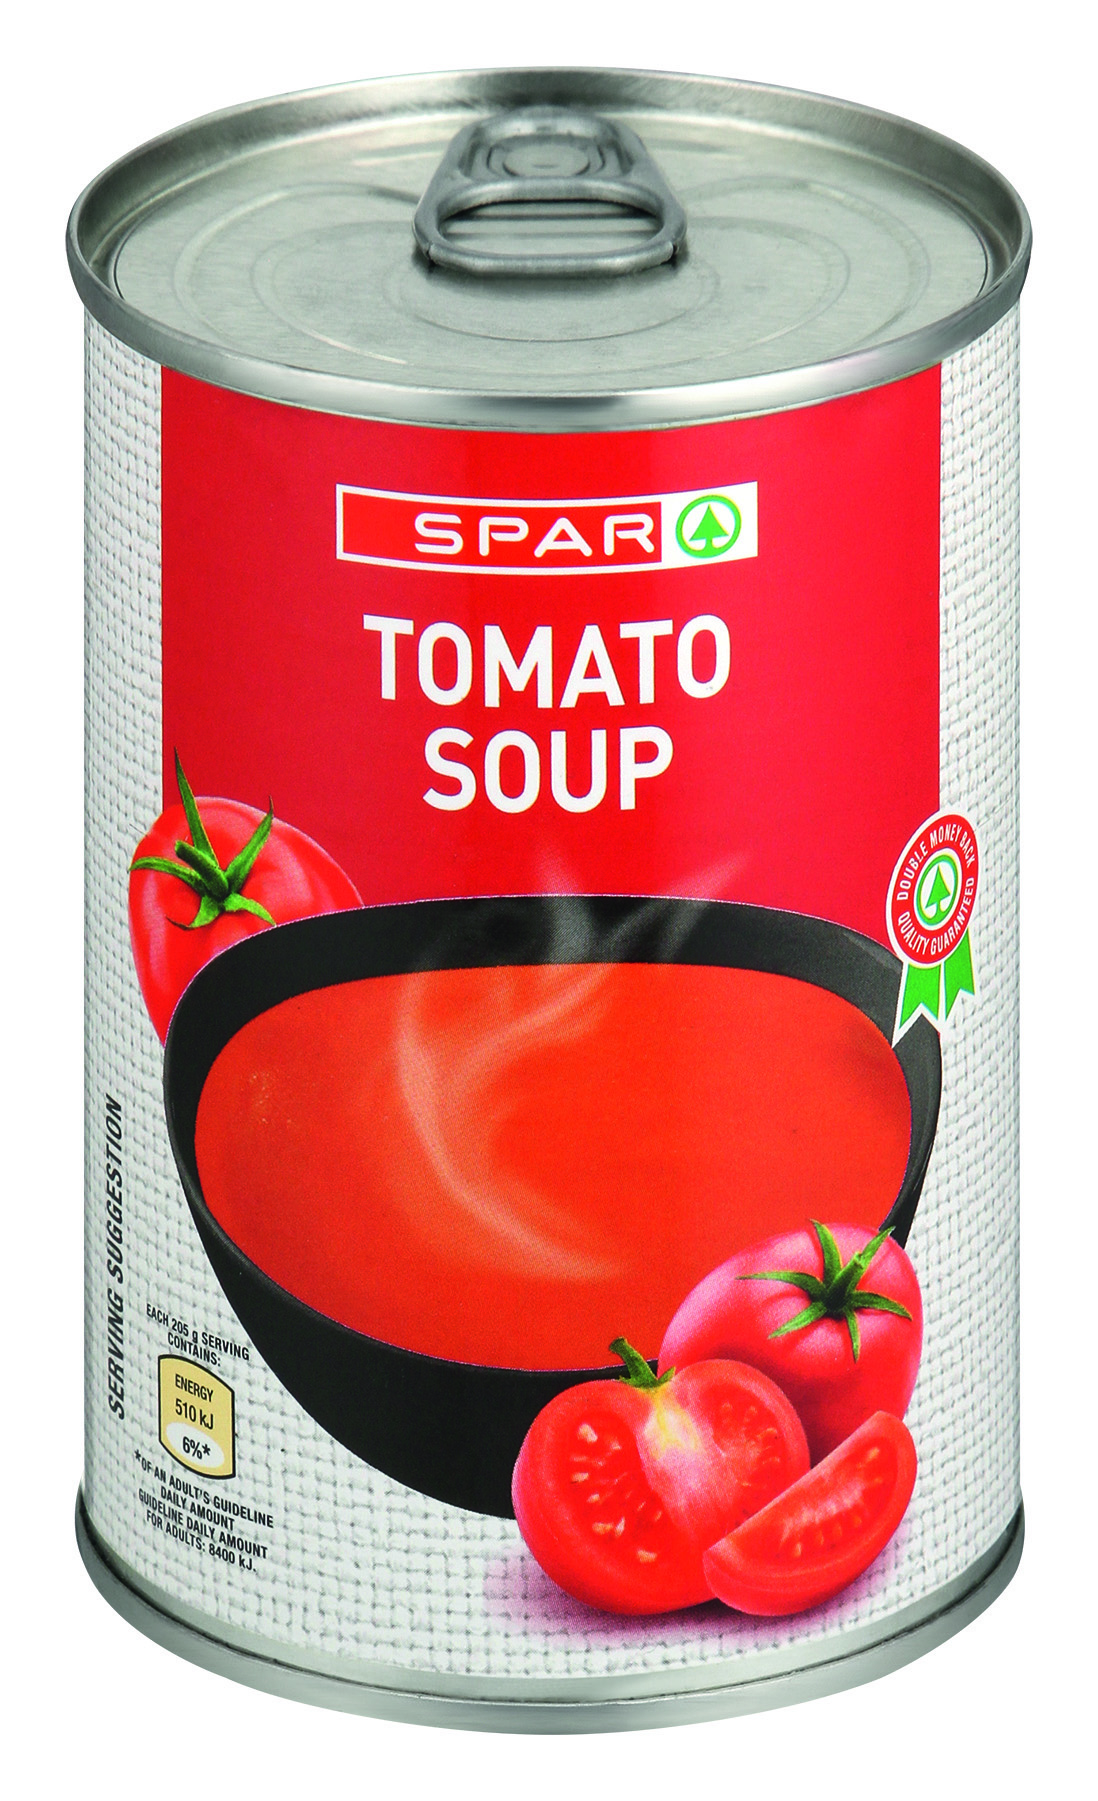 canned soup - tomato soup 